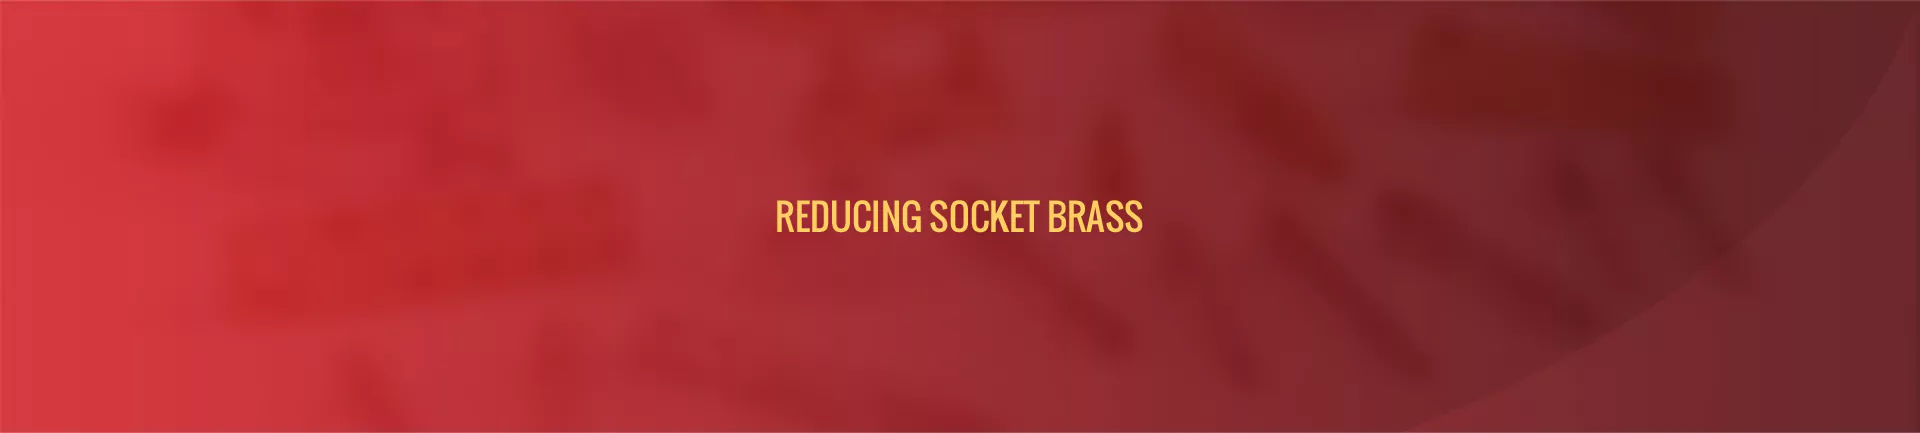 reducing_socket_brass-banner